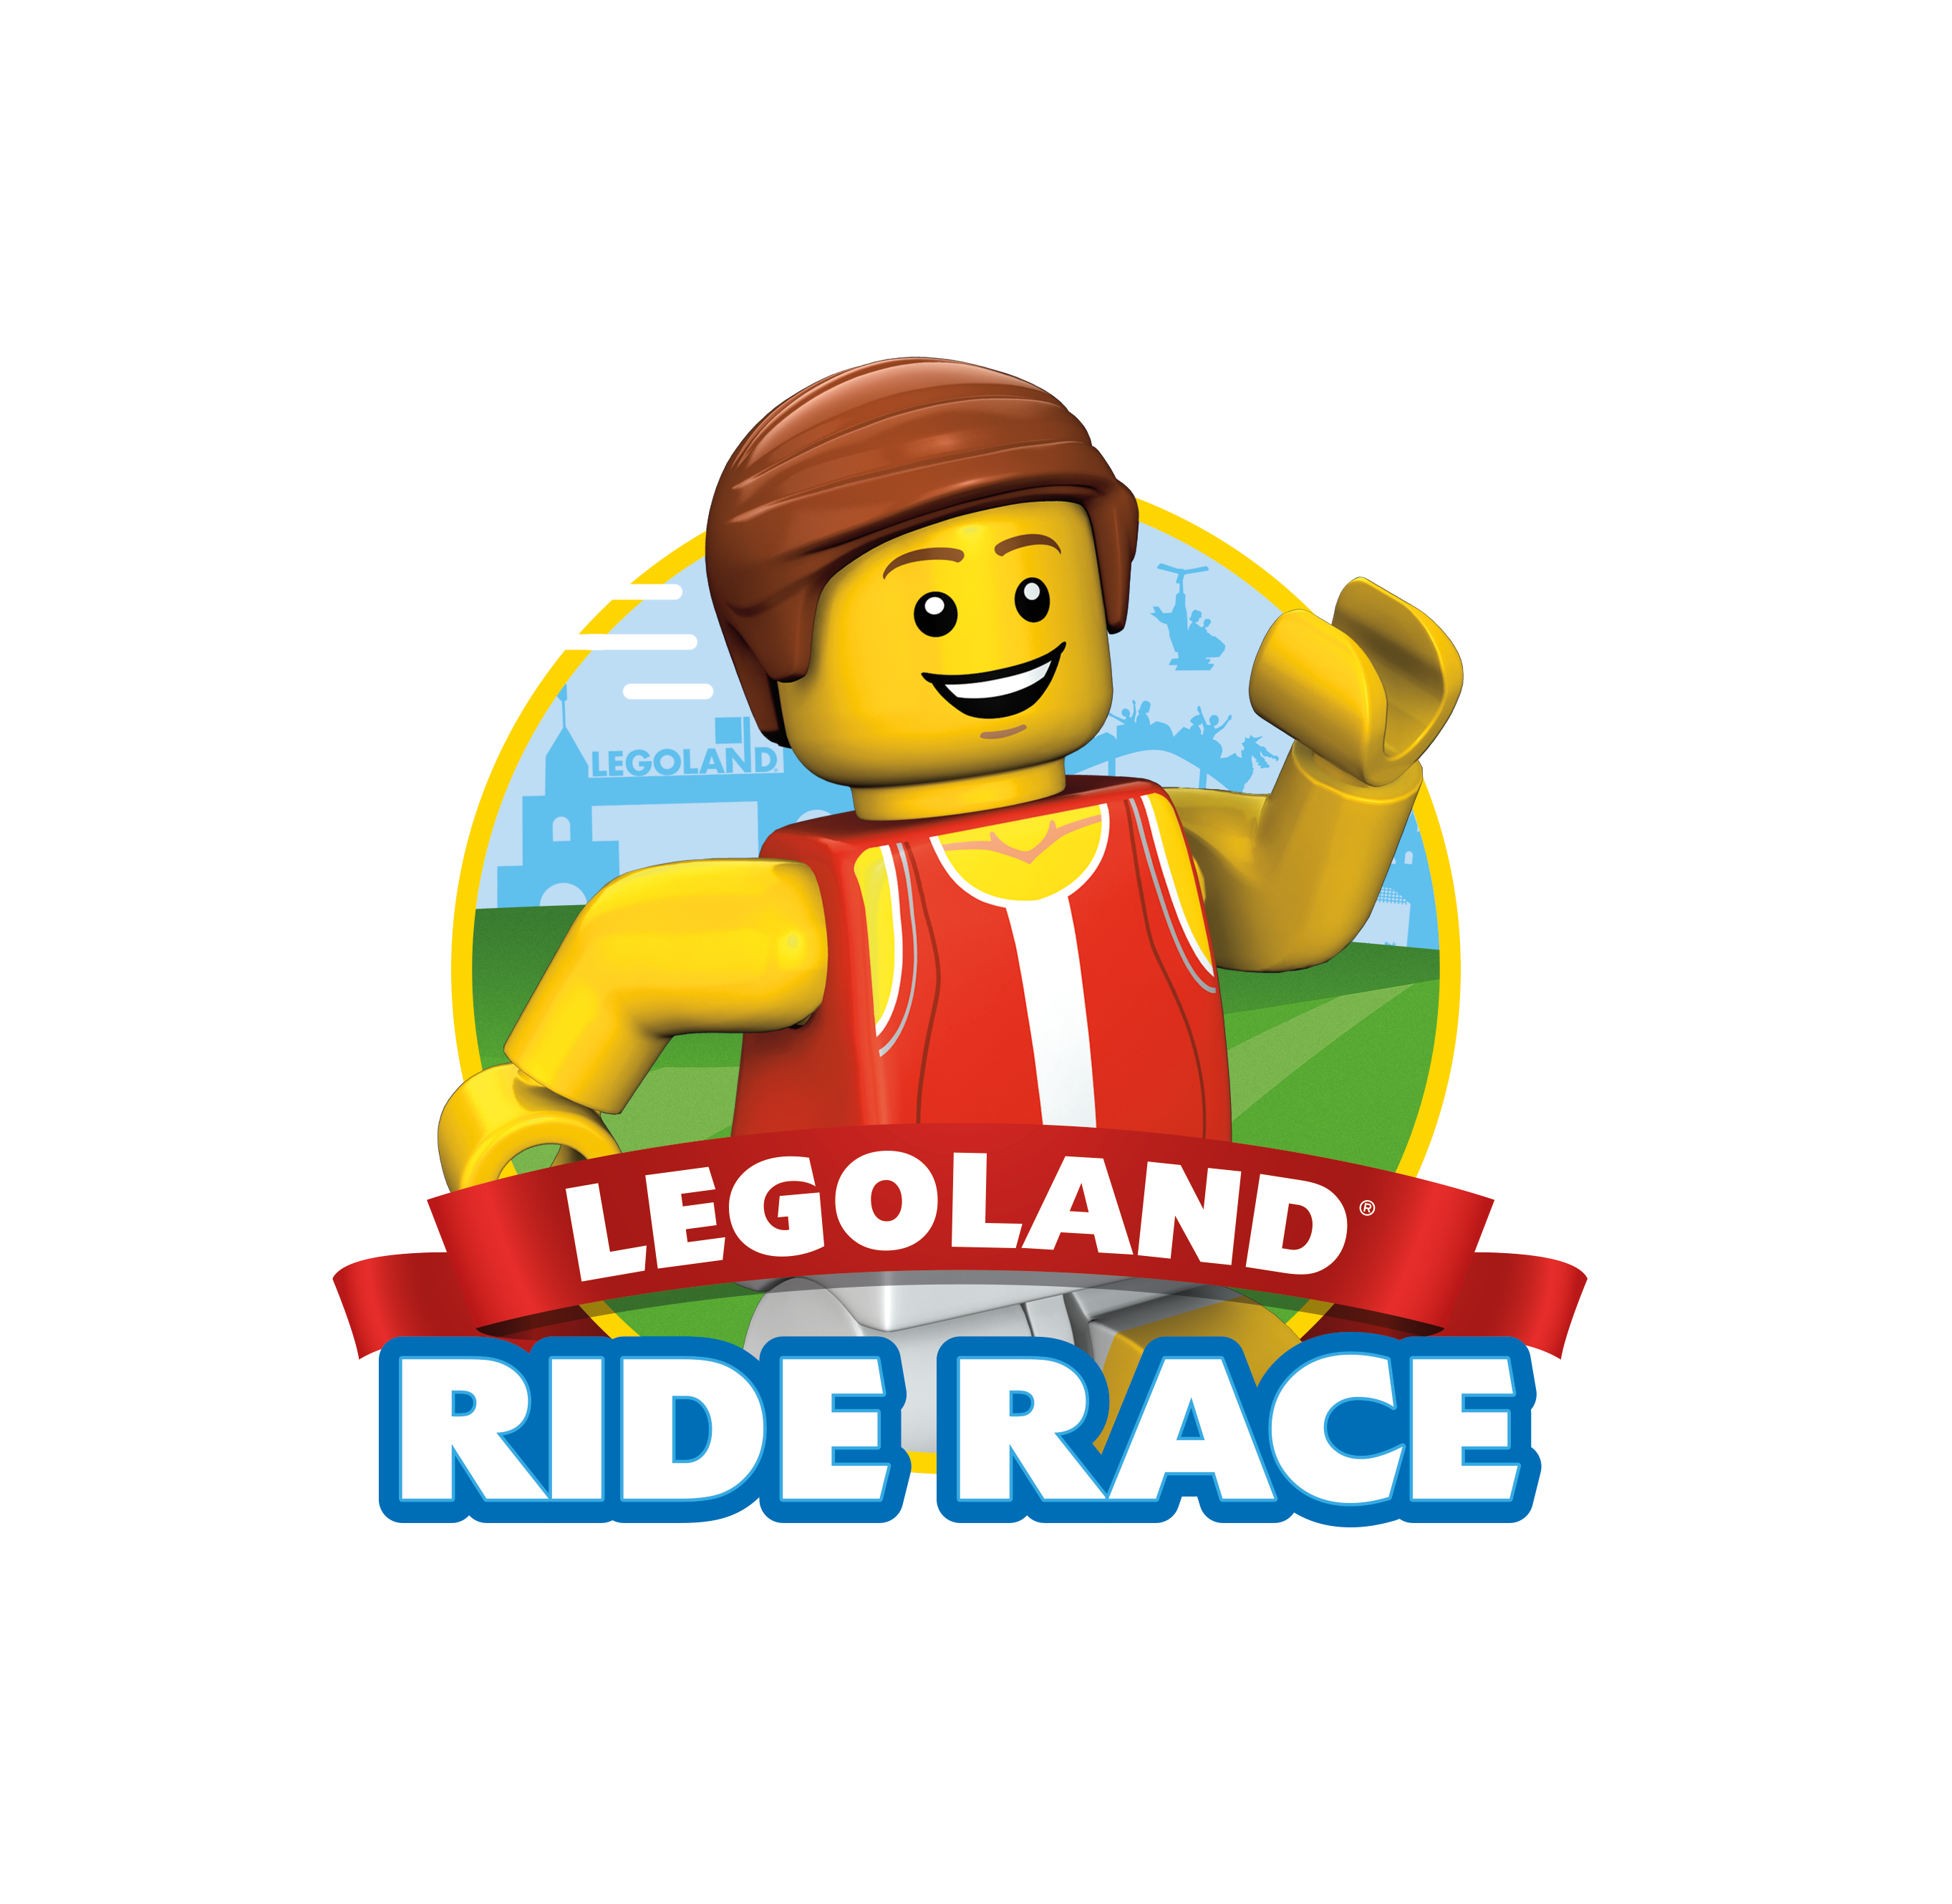 LEGOLAND Ride Race logo